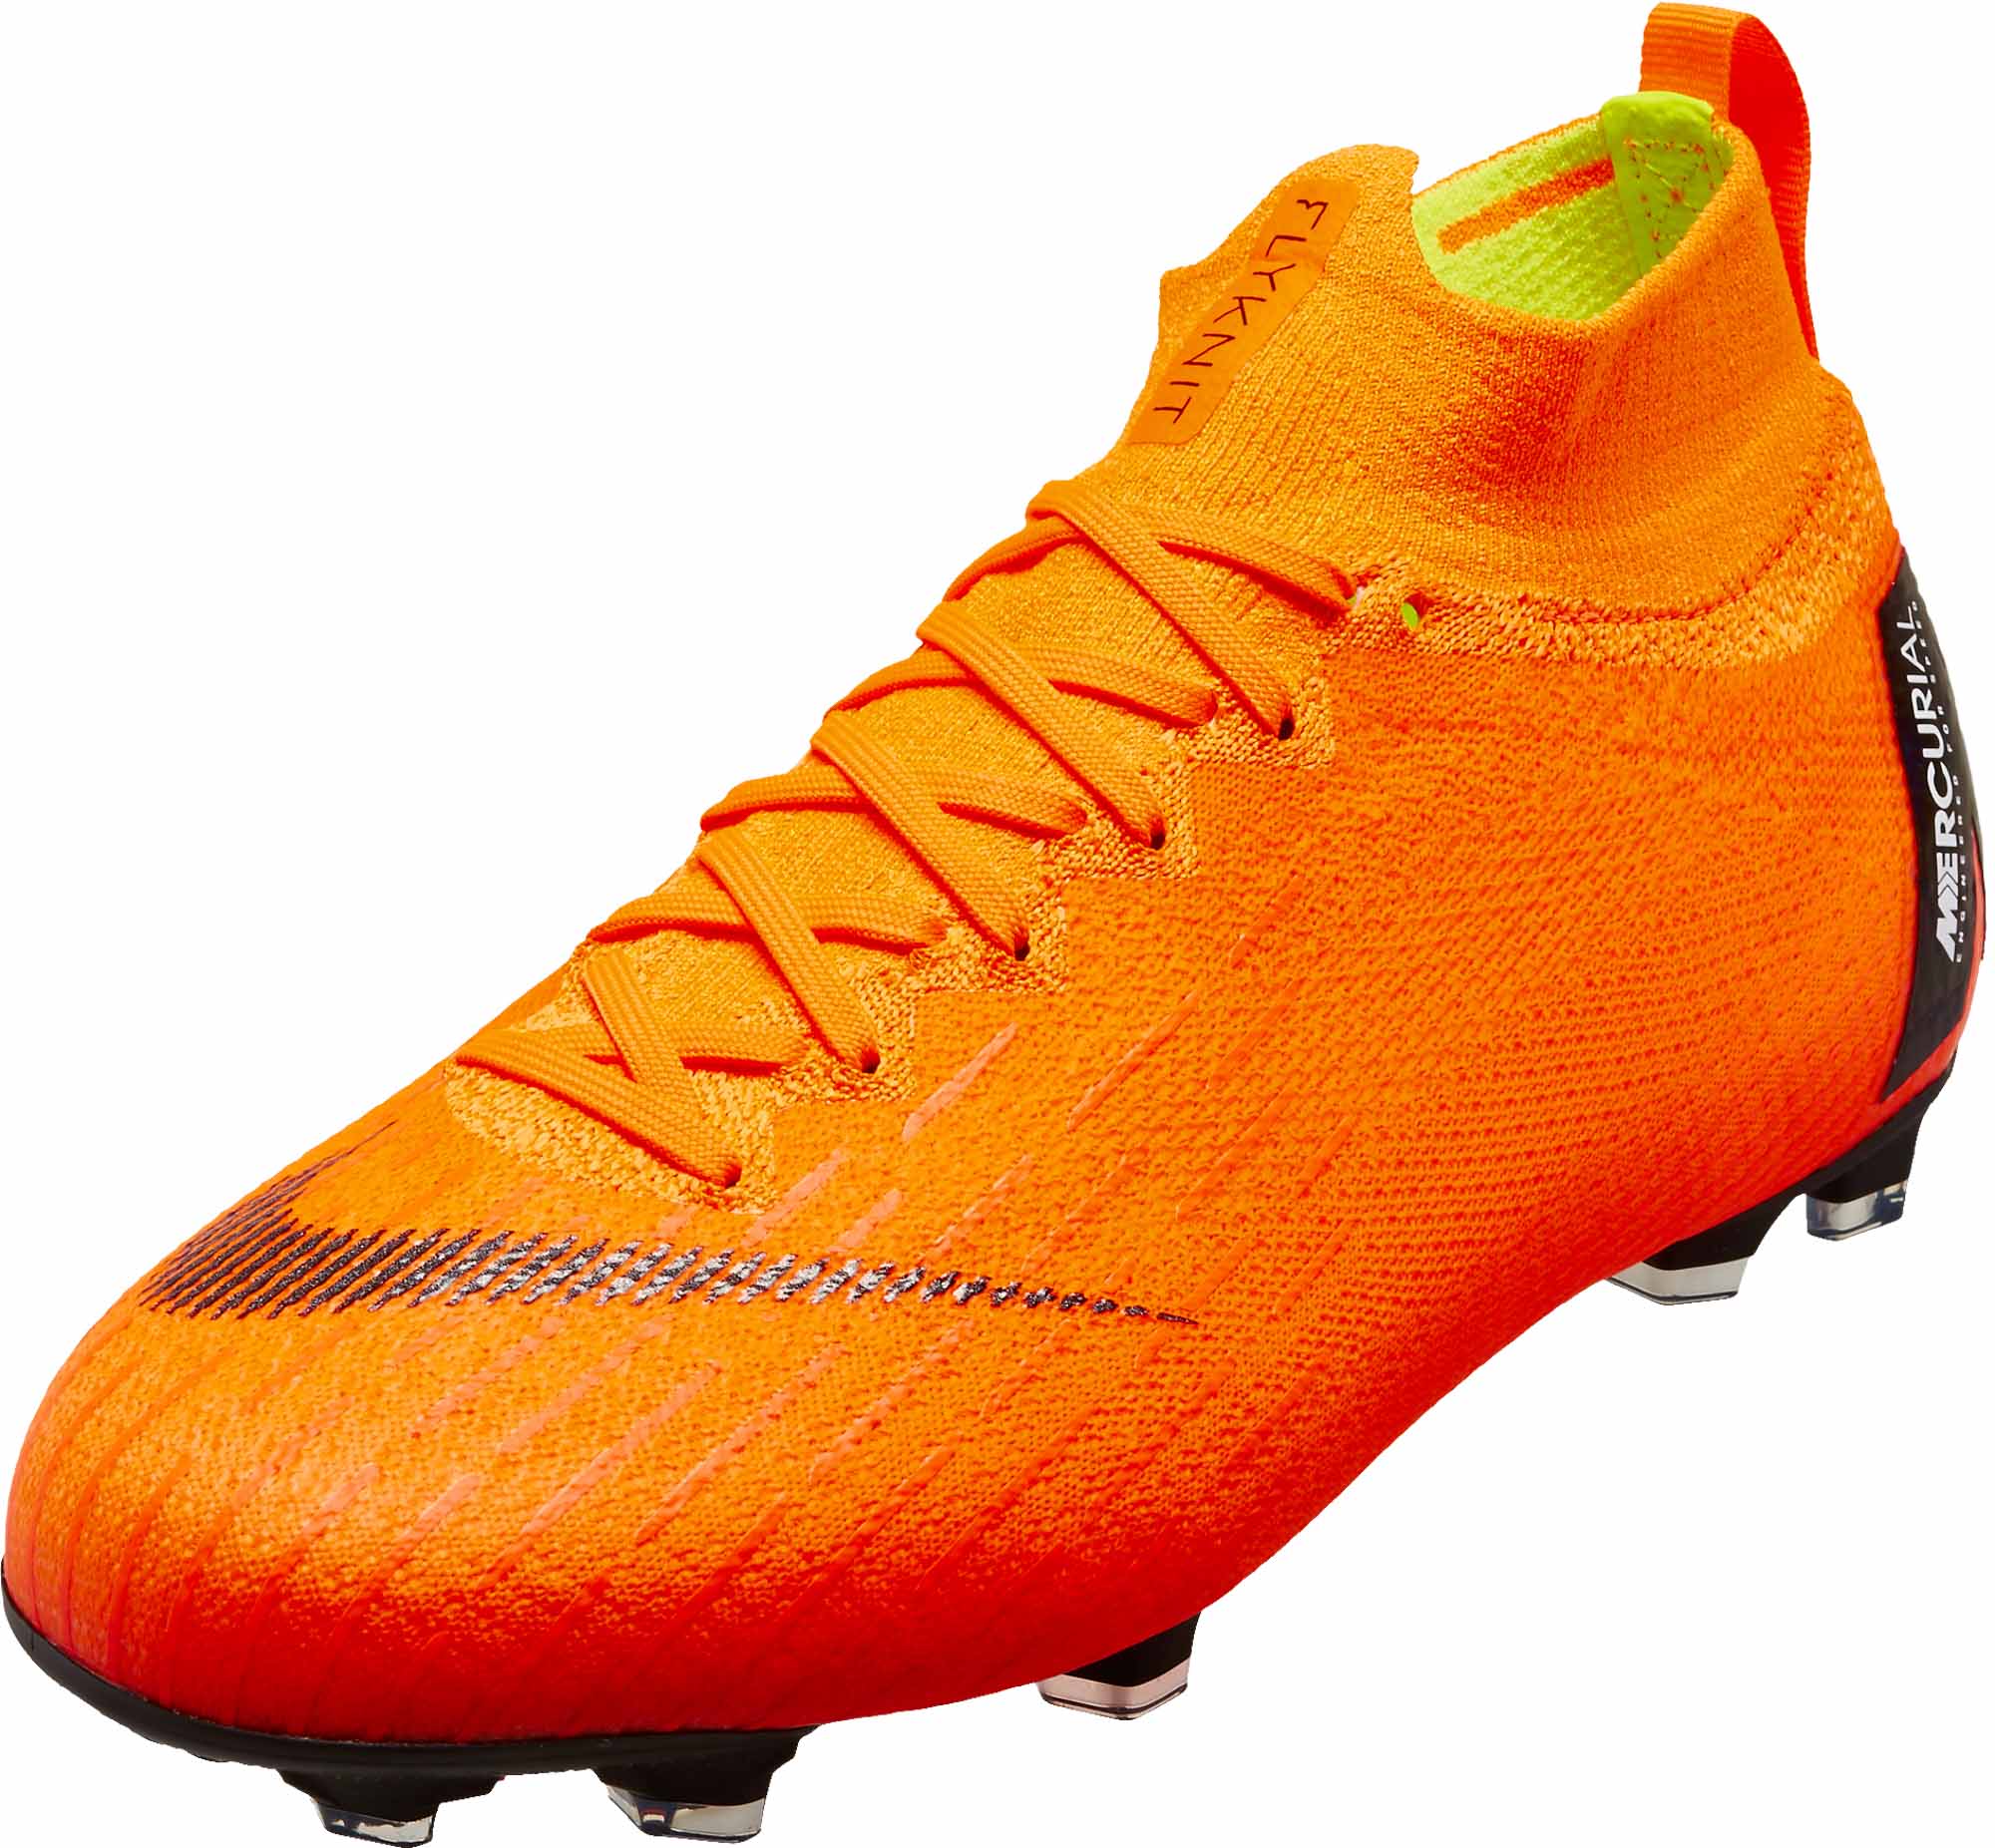 orange nike soccer cleats